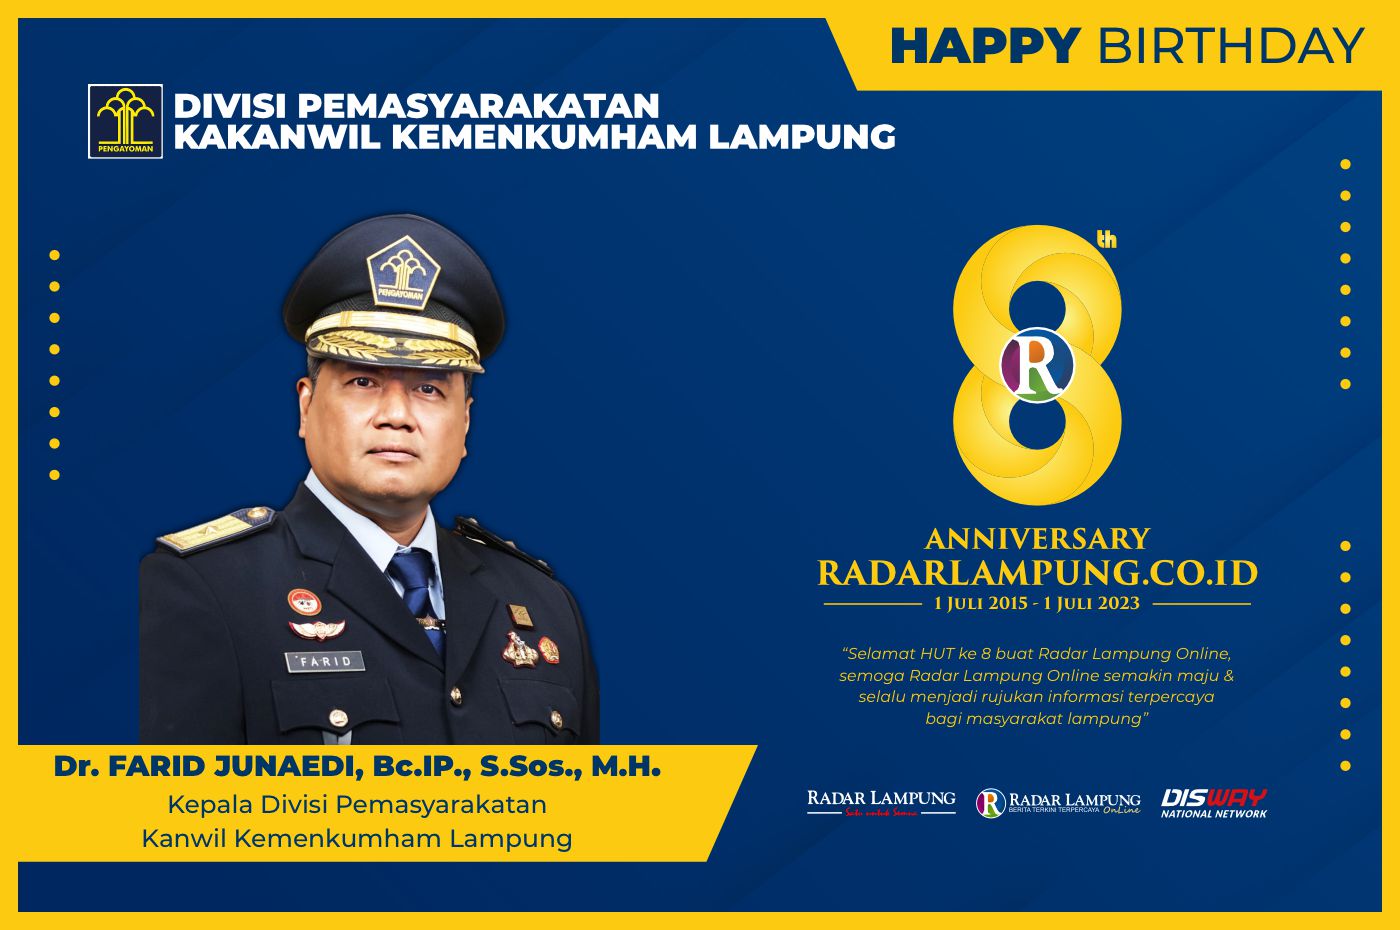 Farid Junaedi: Selamat Ulang Tahun Radar Lampung Online ke-8